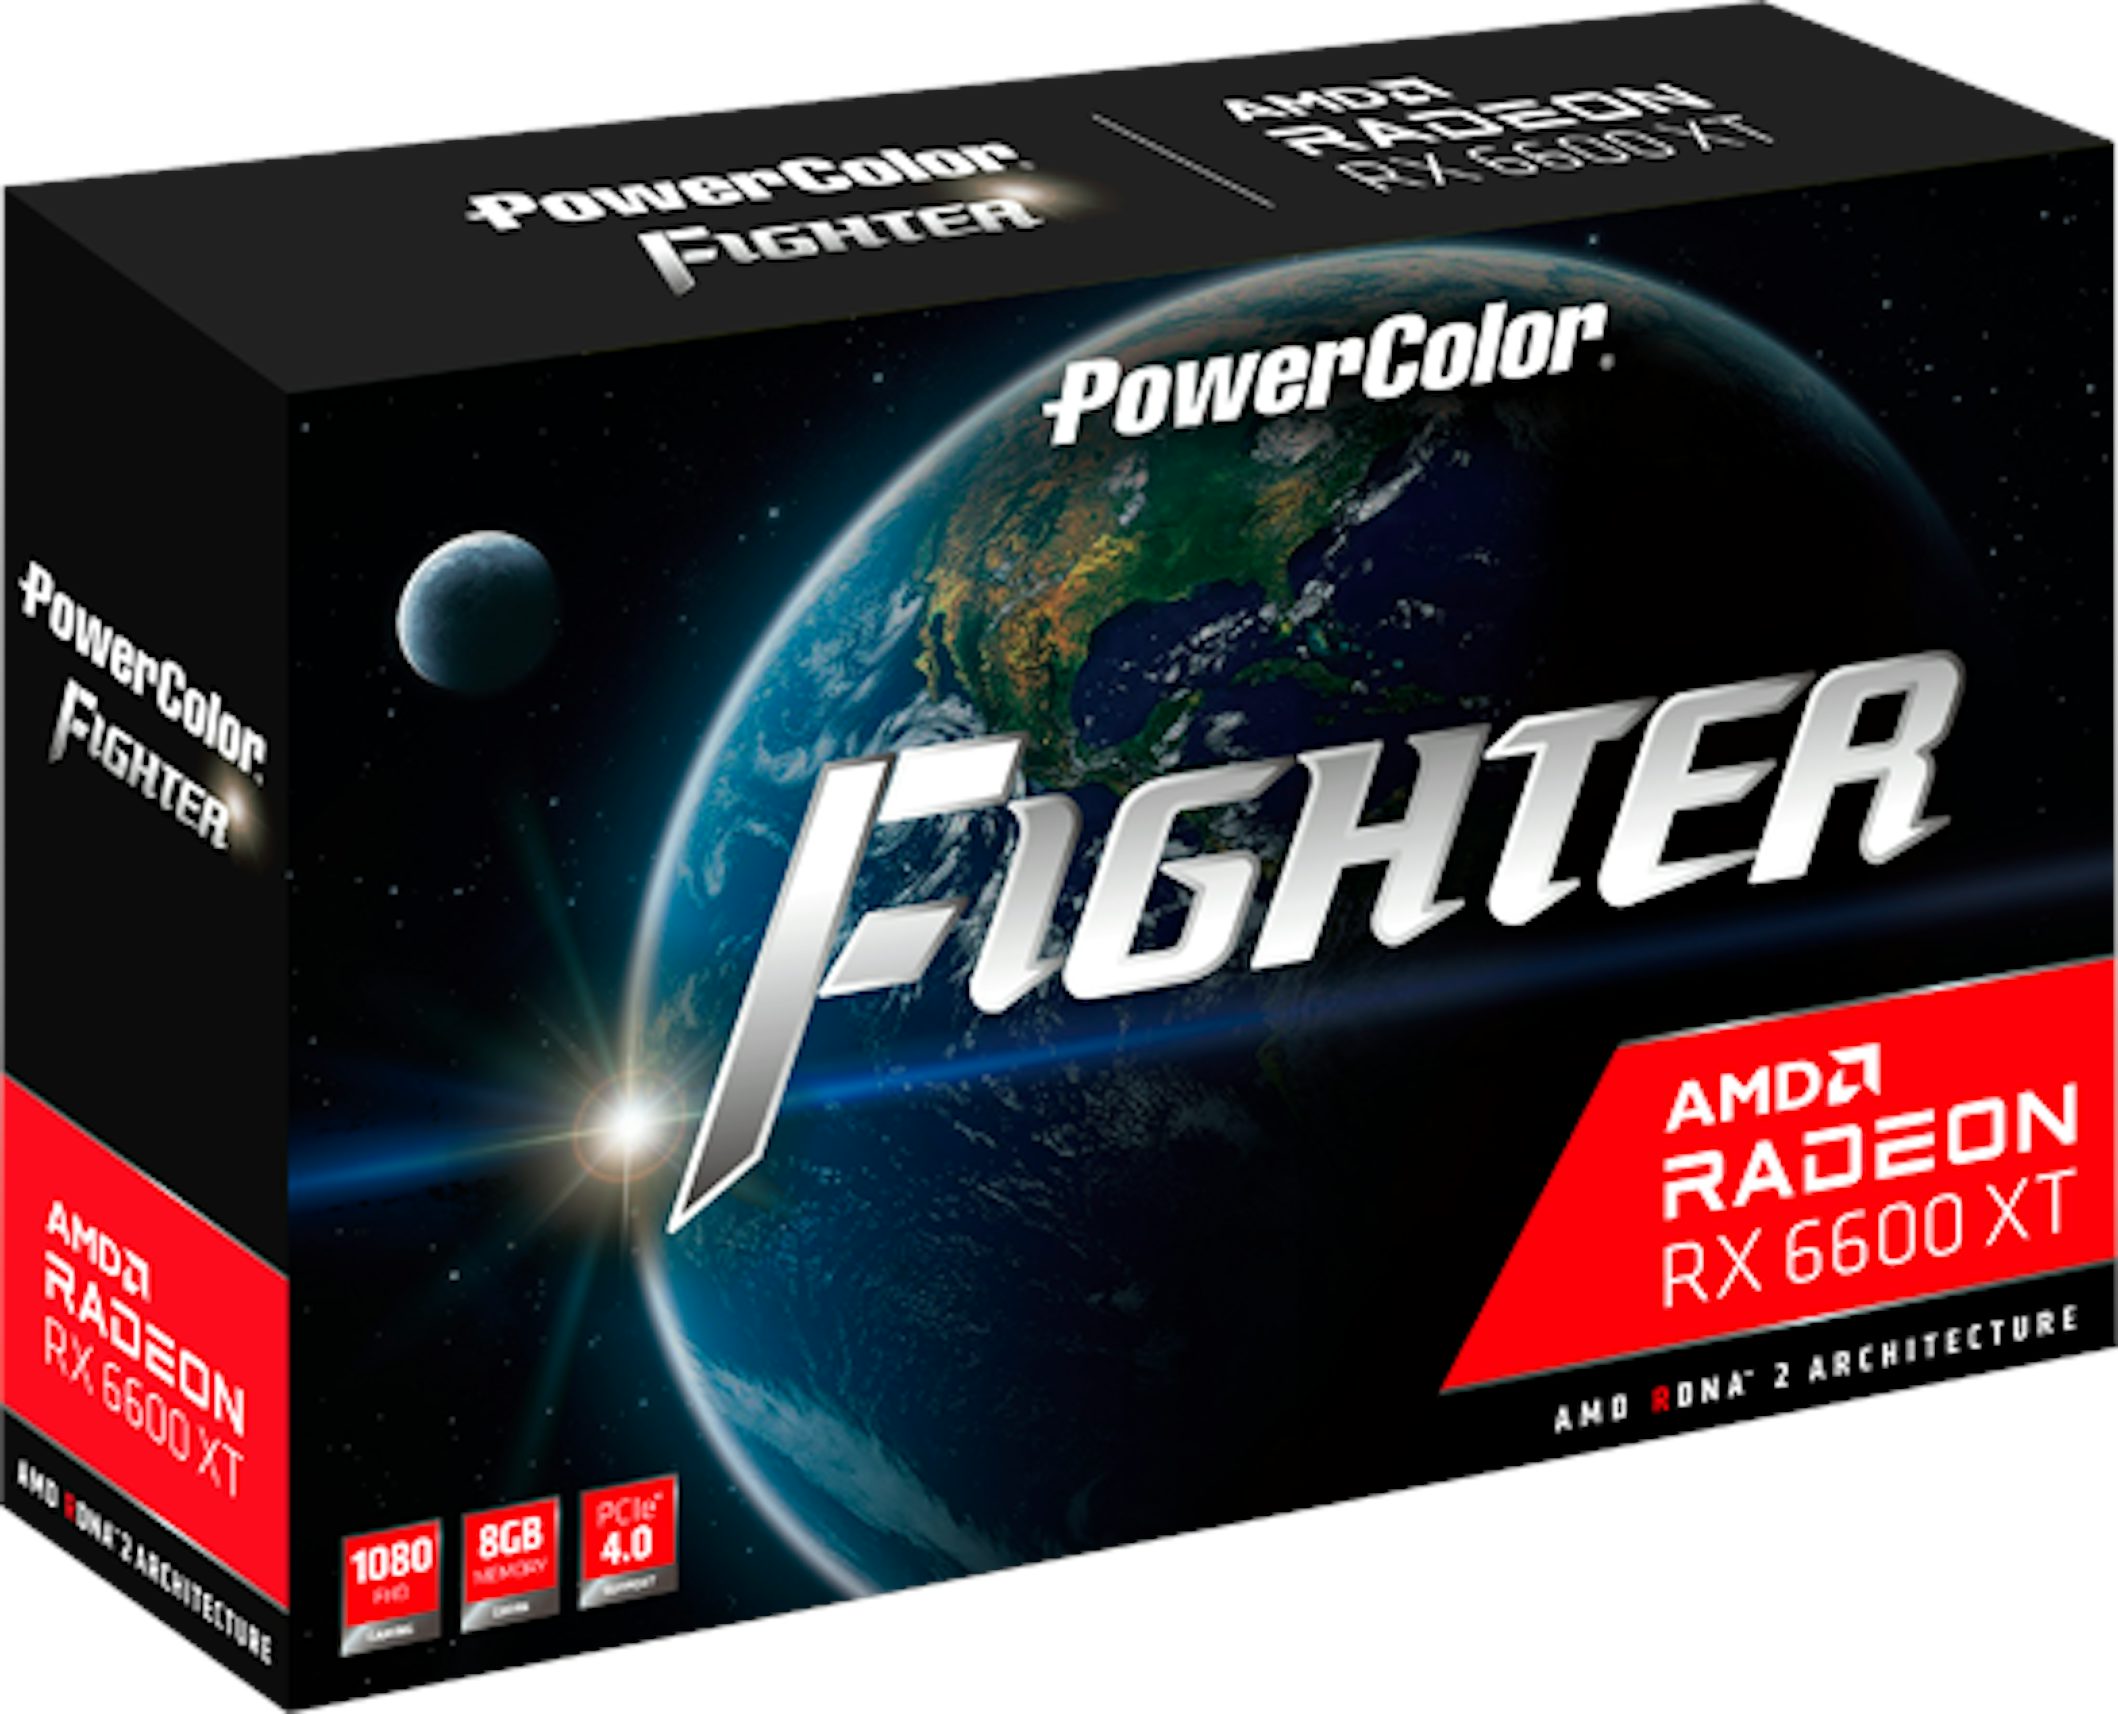 AMD PowerColor Fighter Radoen RX 6600 XT 8G Graphics Card (AXRX